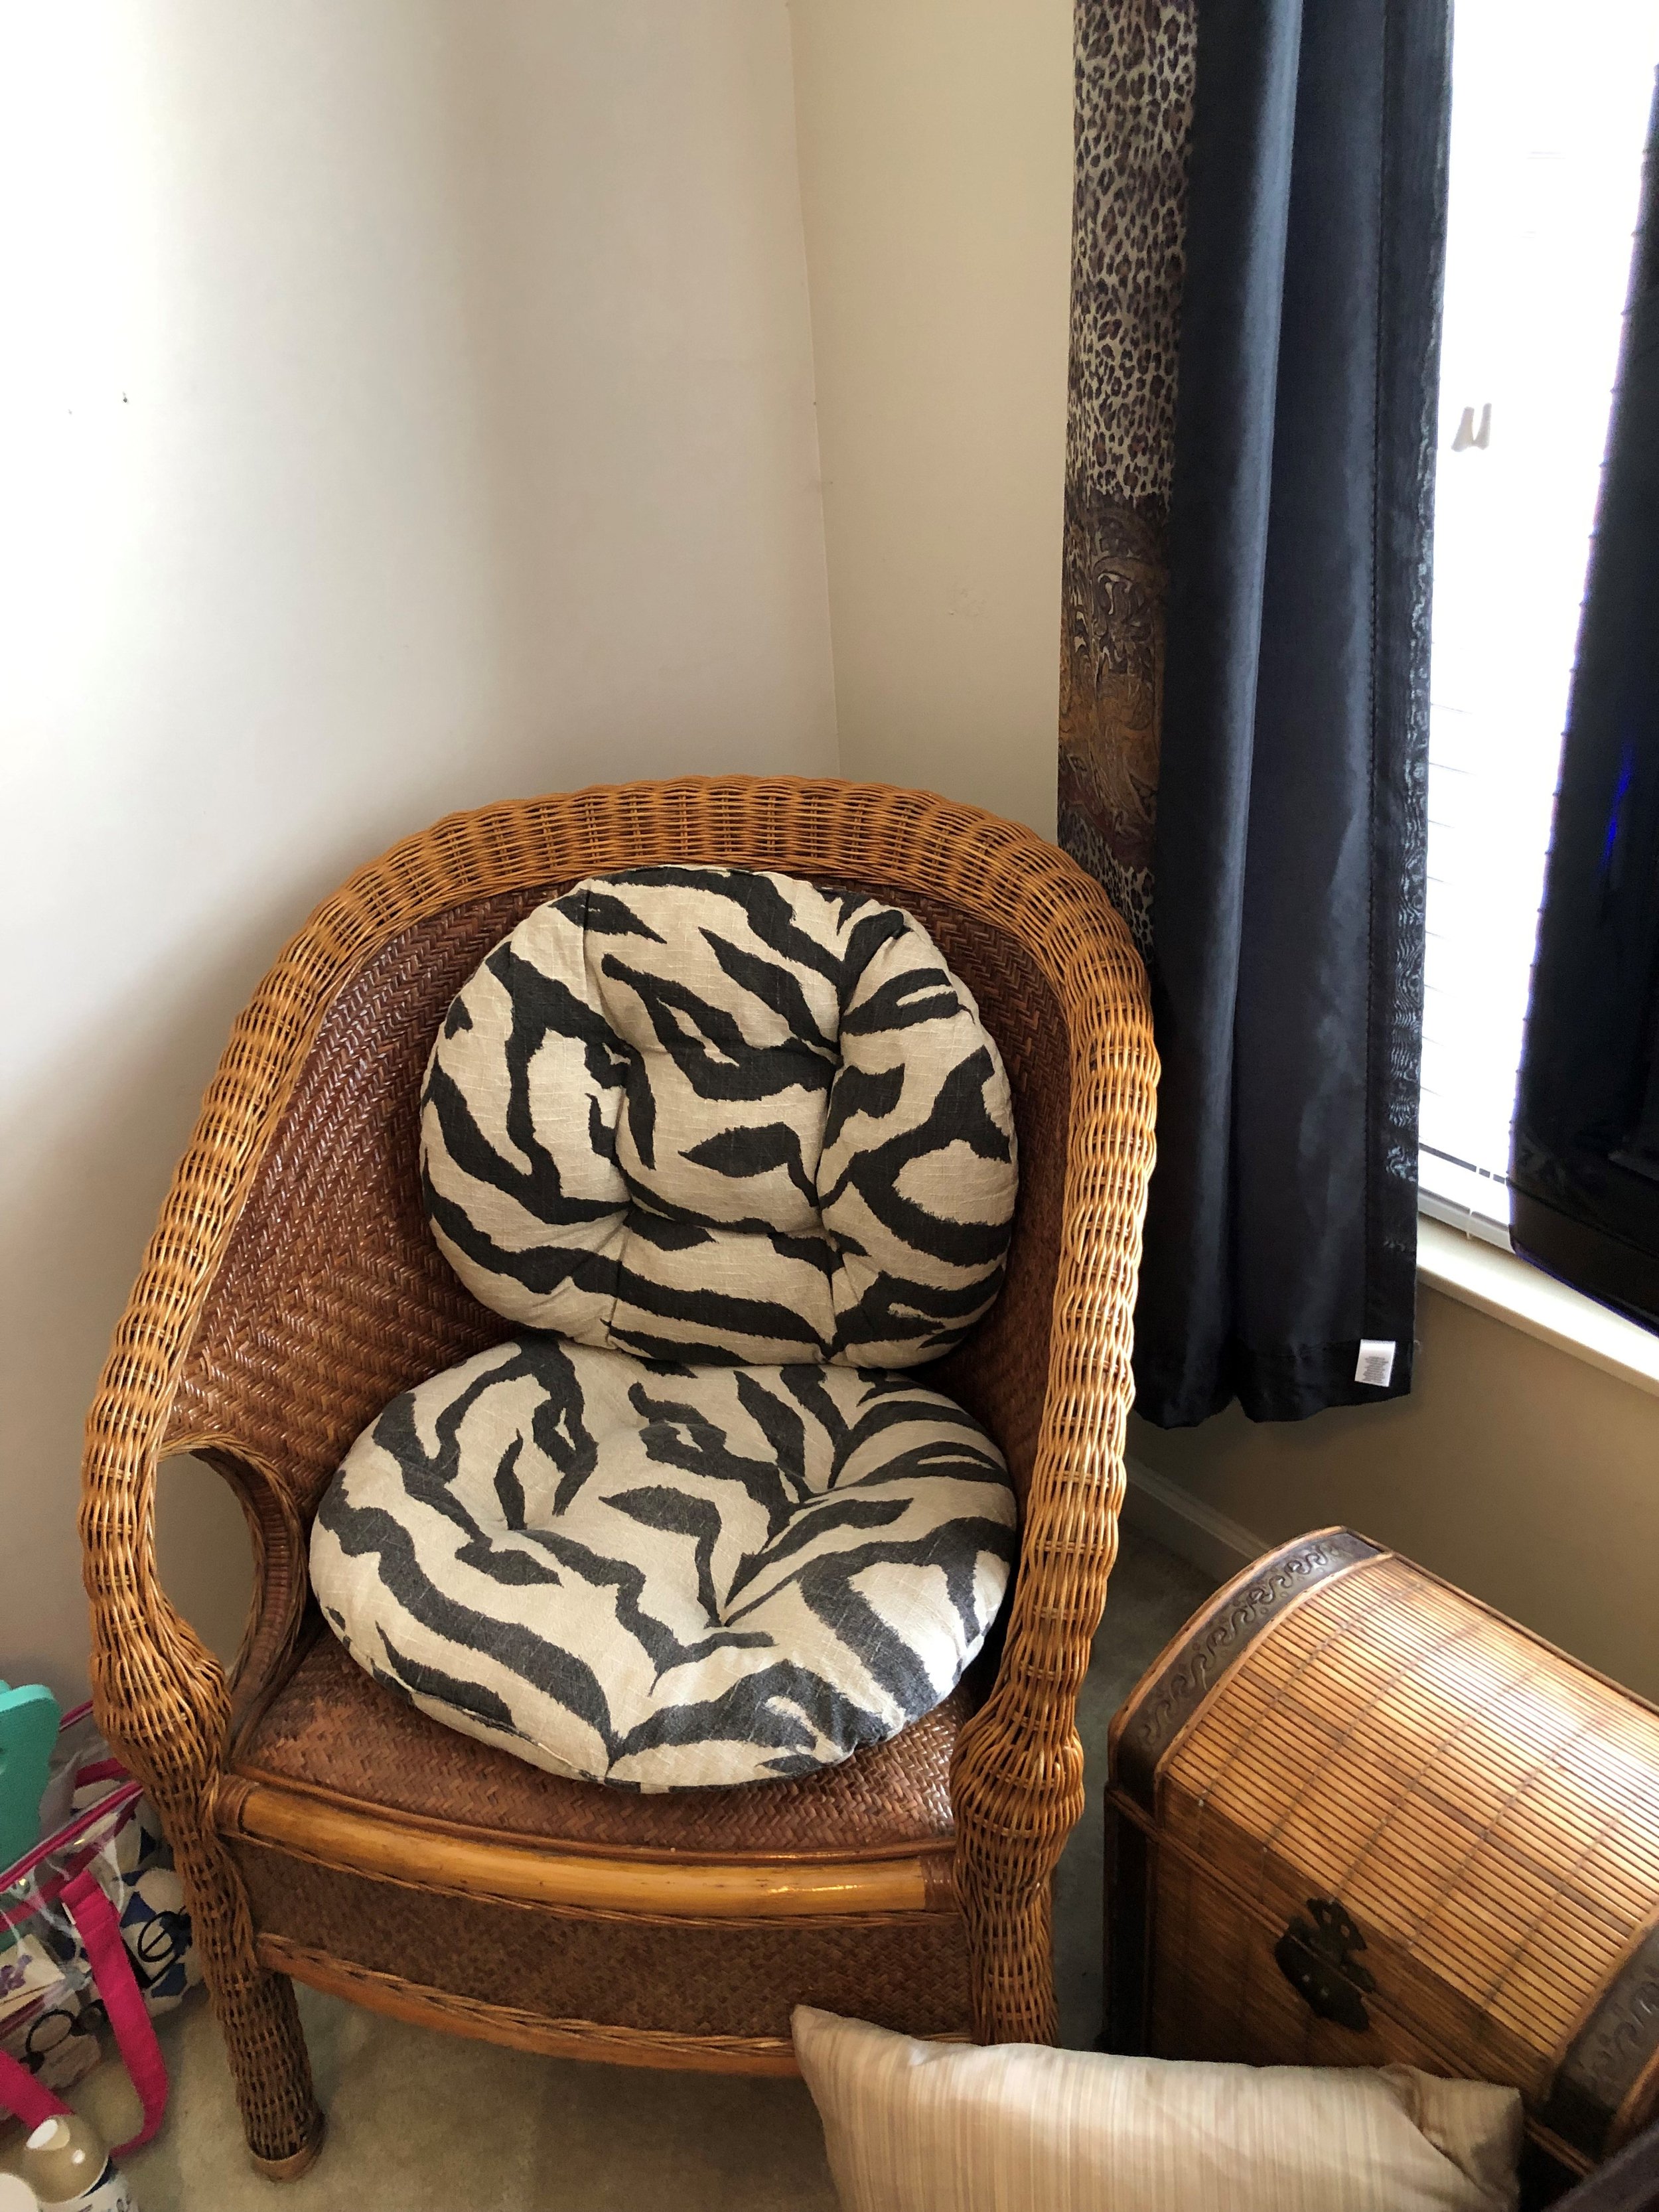 Wicker Chair with Cushion.jpg